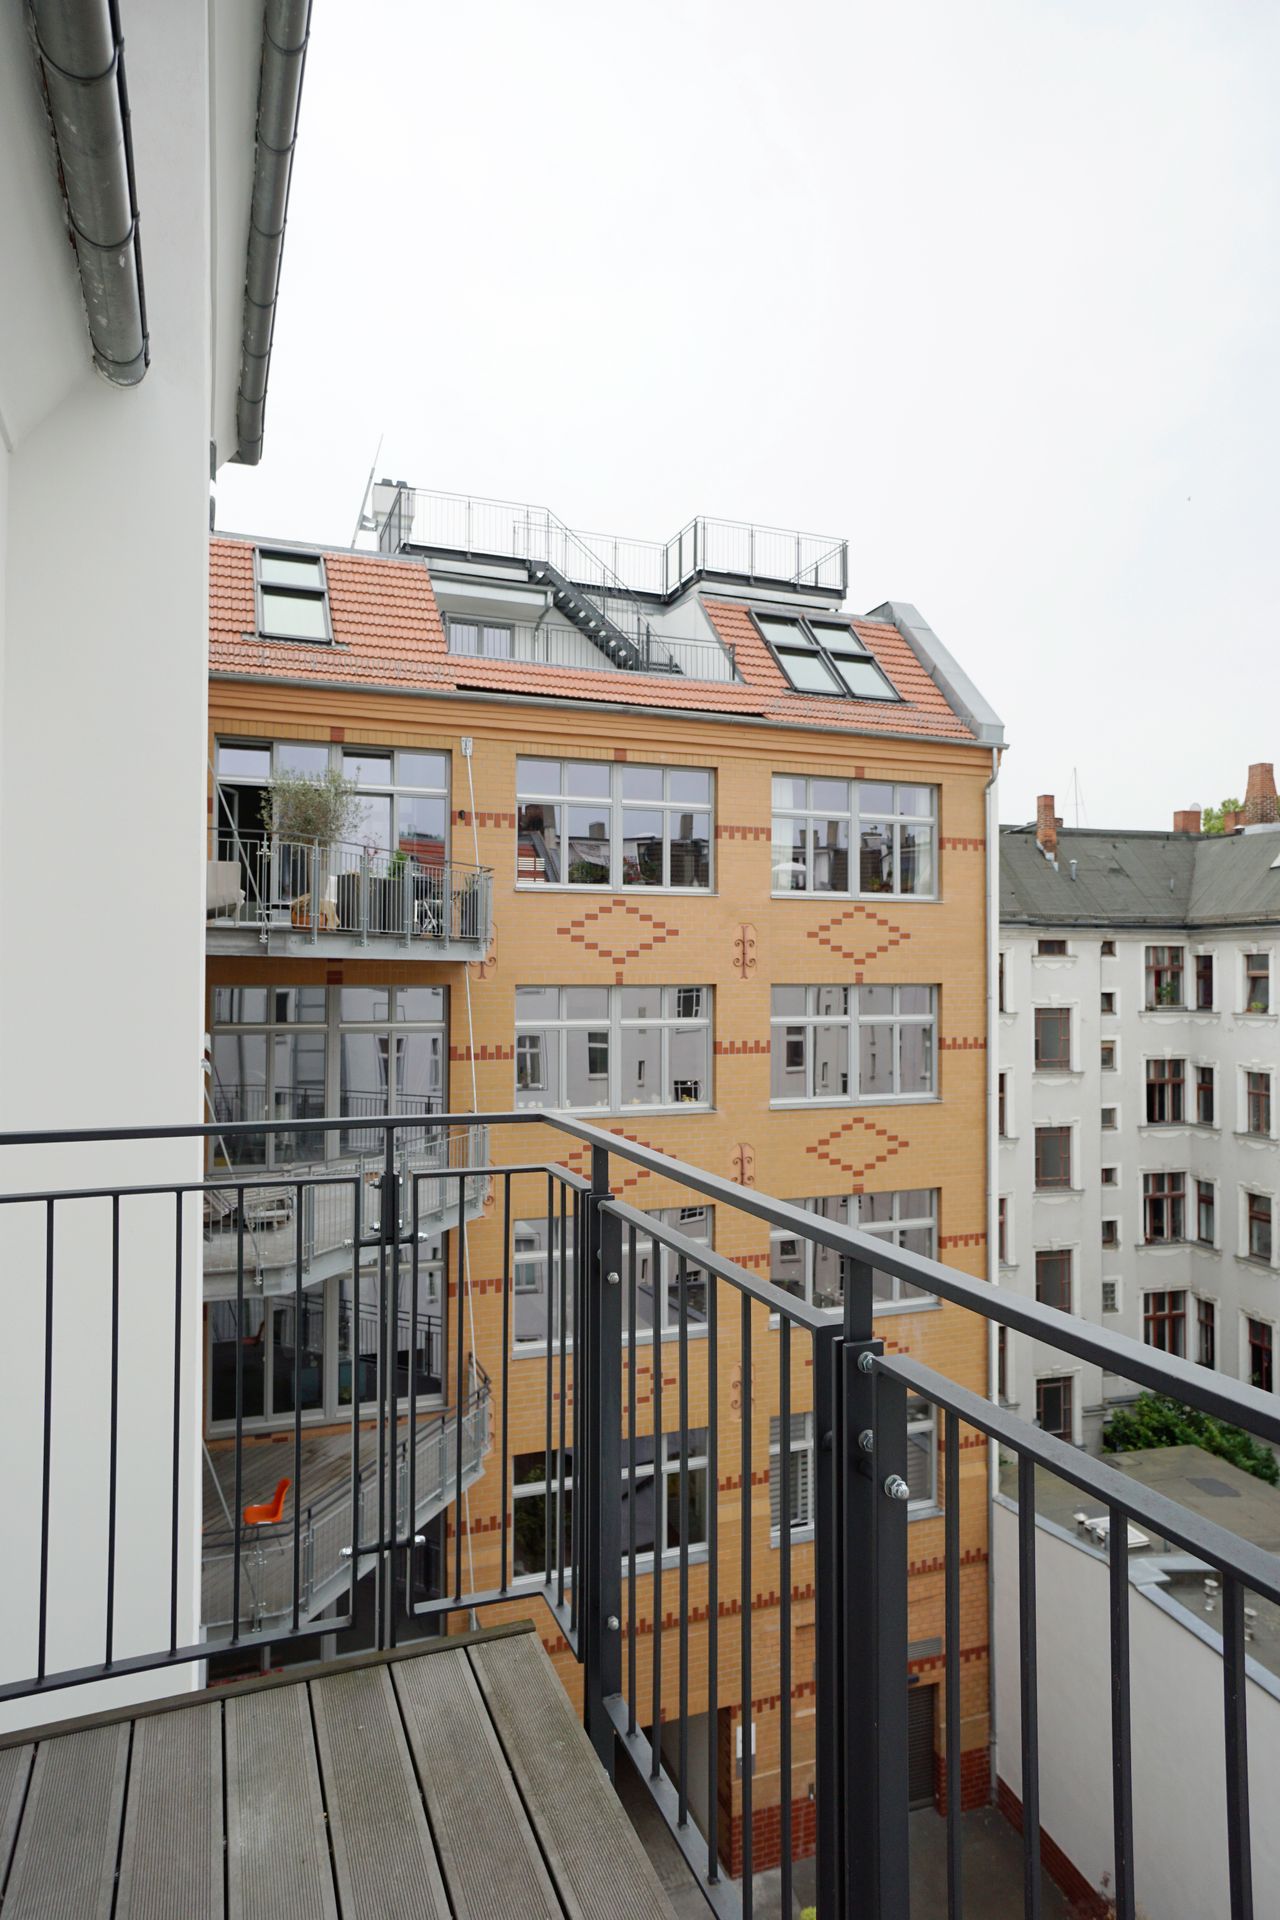 danish designed apartment in the middle of beautiful paul lincke ufer area / kreuzberg